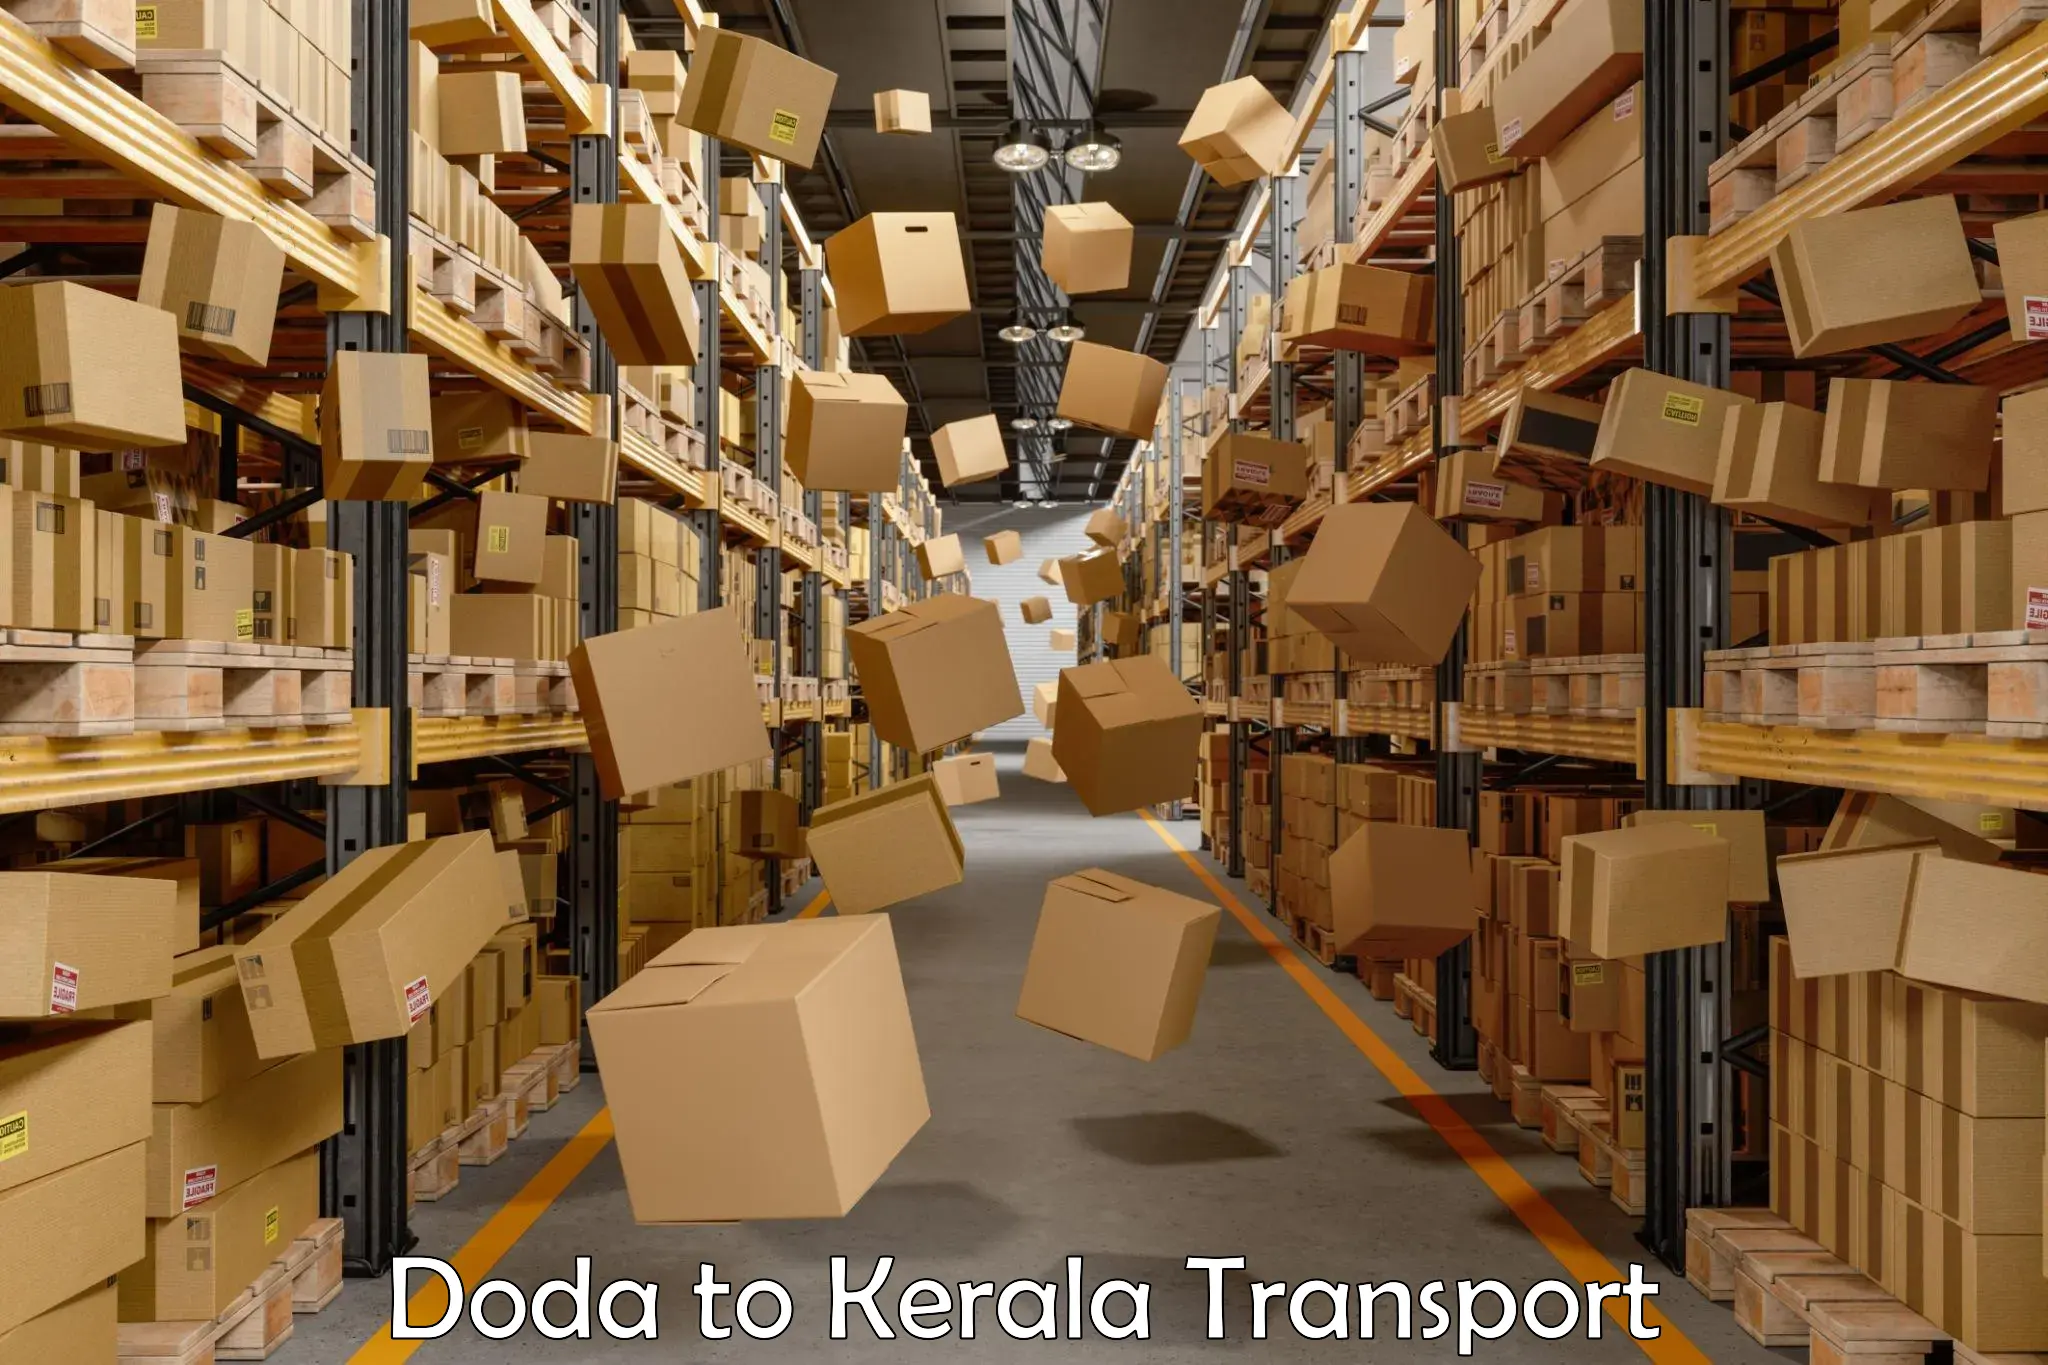 Delivery service Doda to Kochi